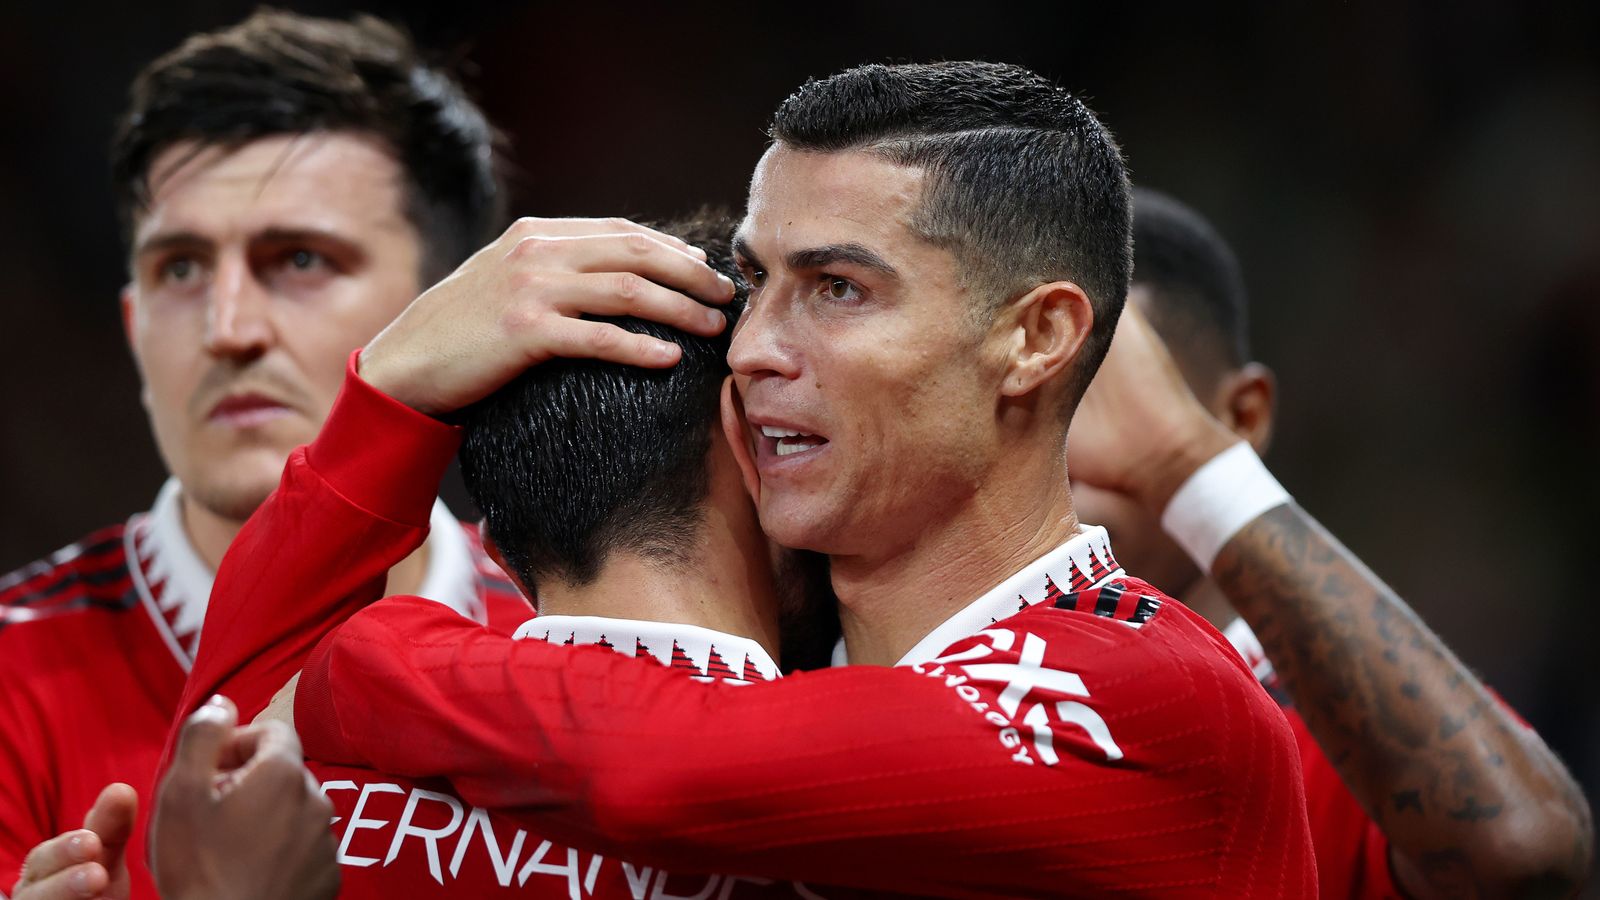 Ronaldo scores on return as Man Utd qualify for Europa League knockout stage